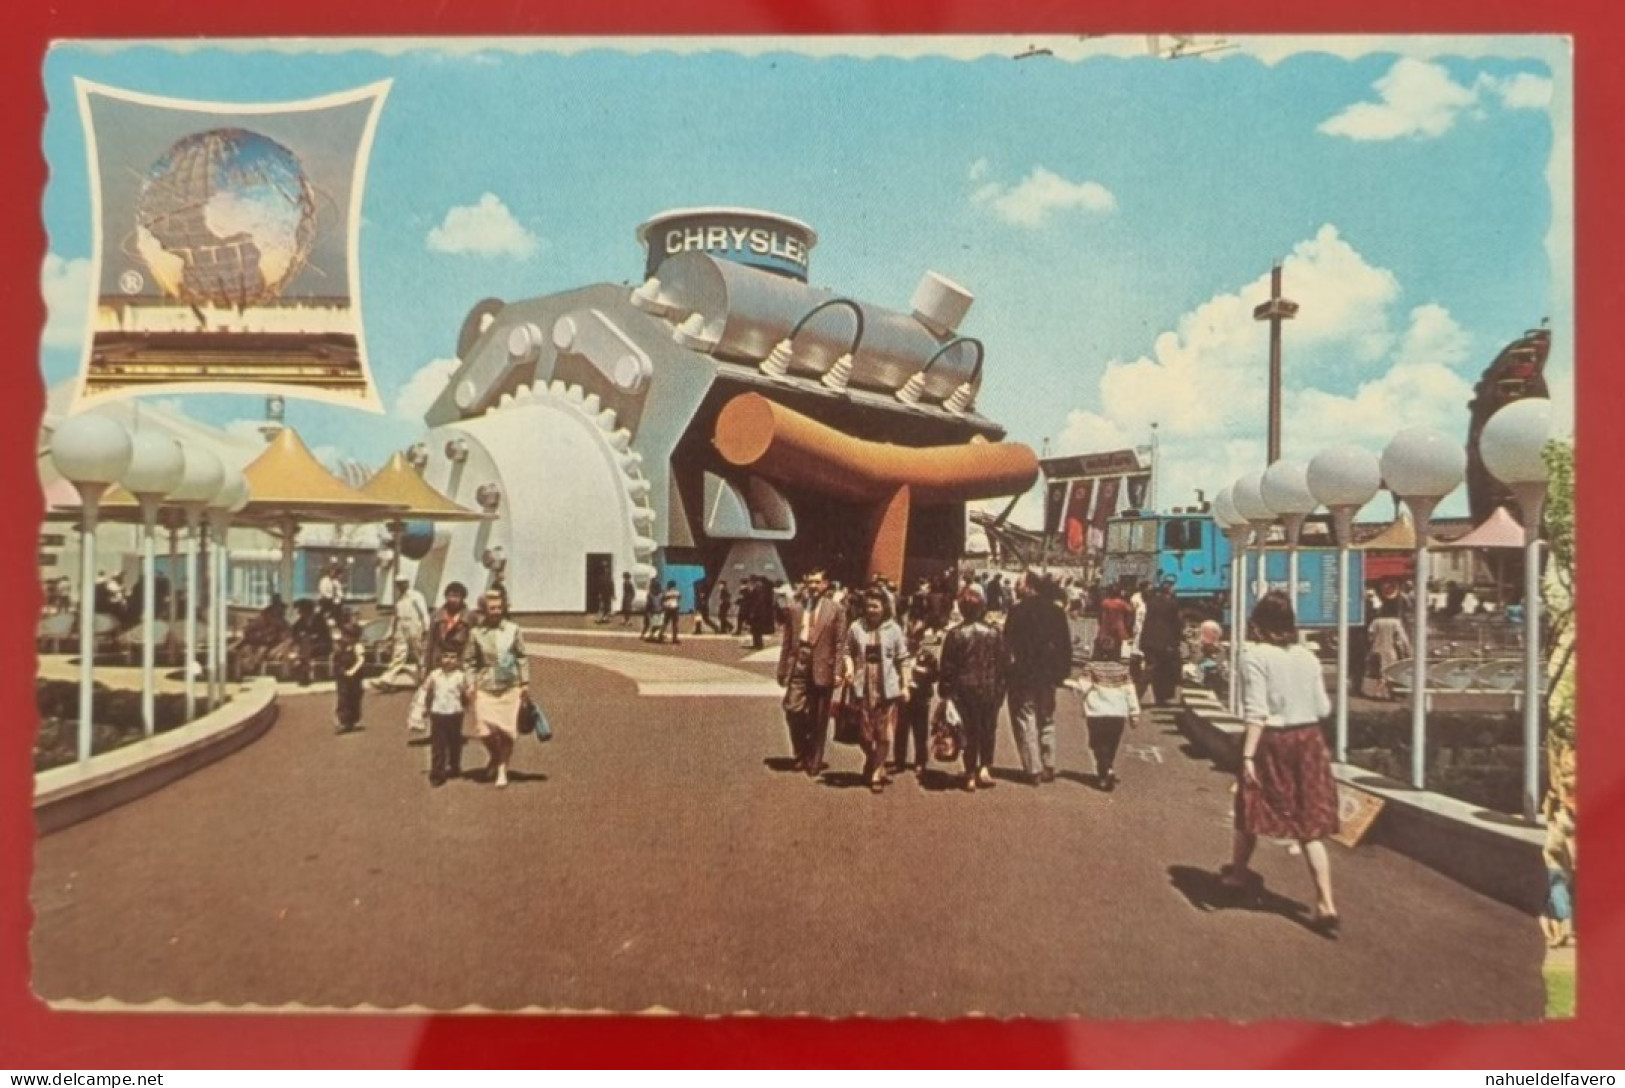 Uncirculated Postcard - USA - NY, NEW YORK WORLD'S FAIR 1964-65 - THIS IS CHRYSKER CORPORATION'S GIANT - Expositions